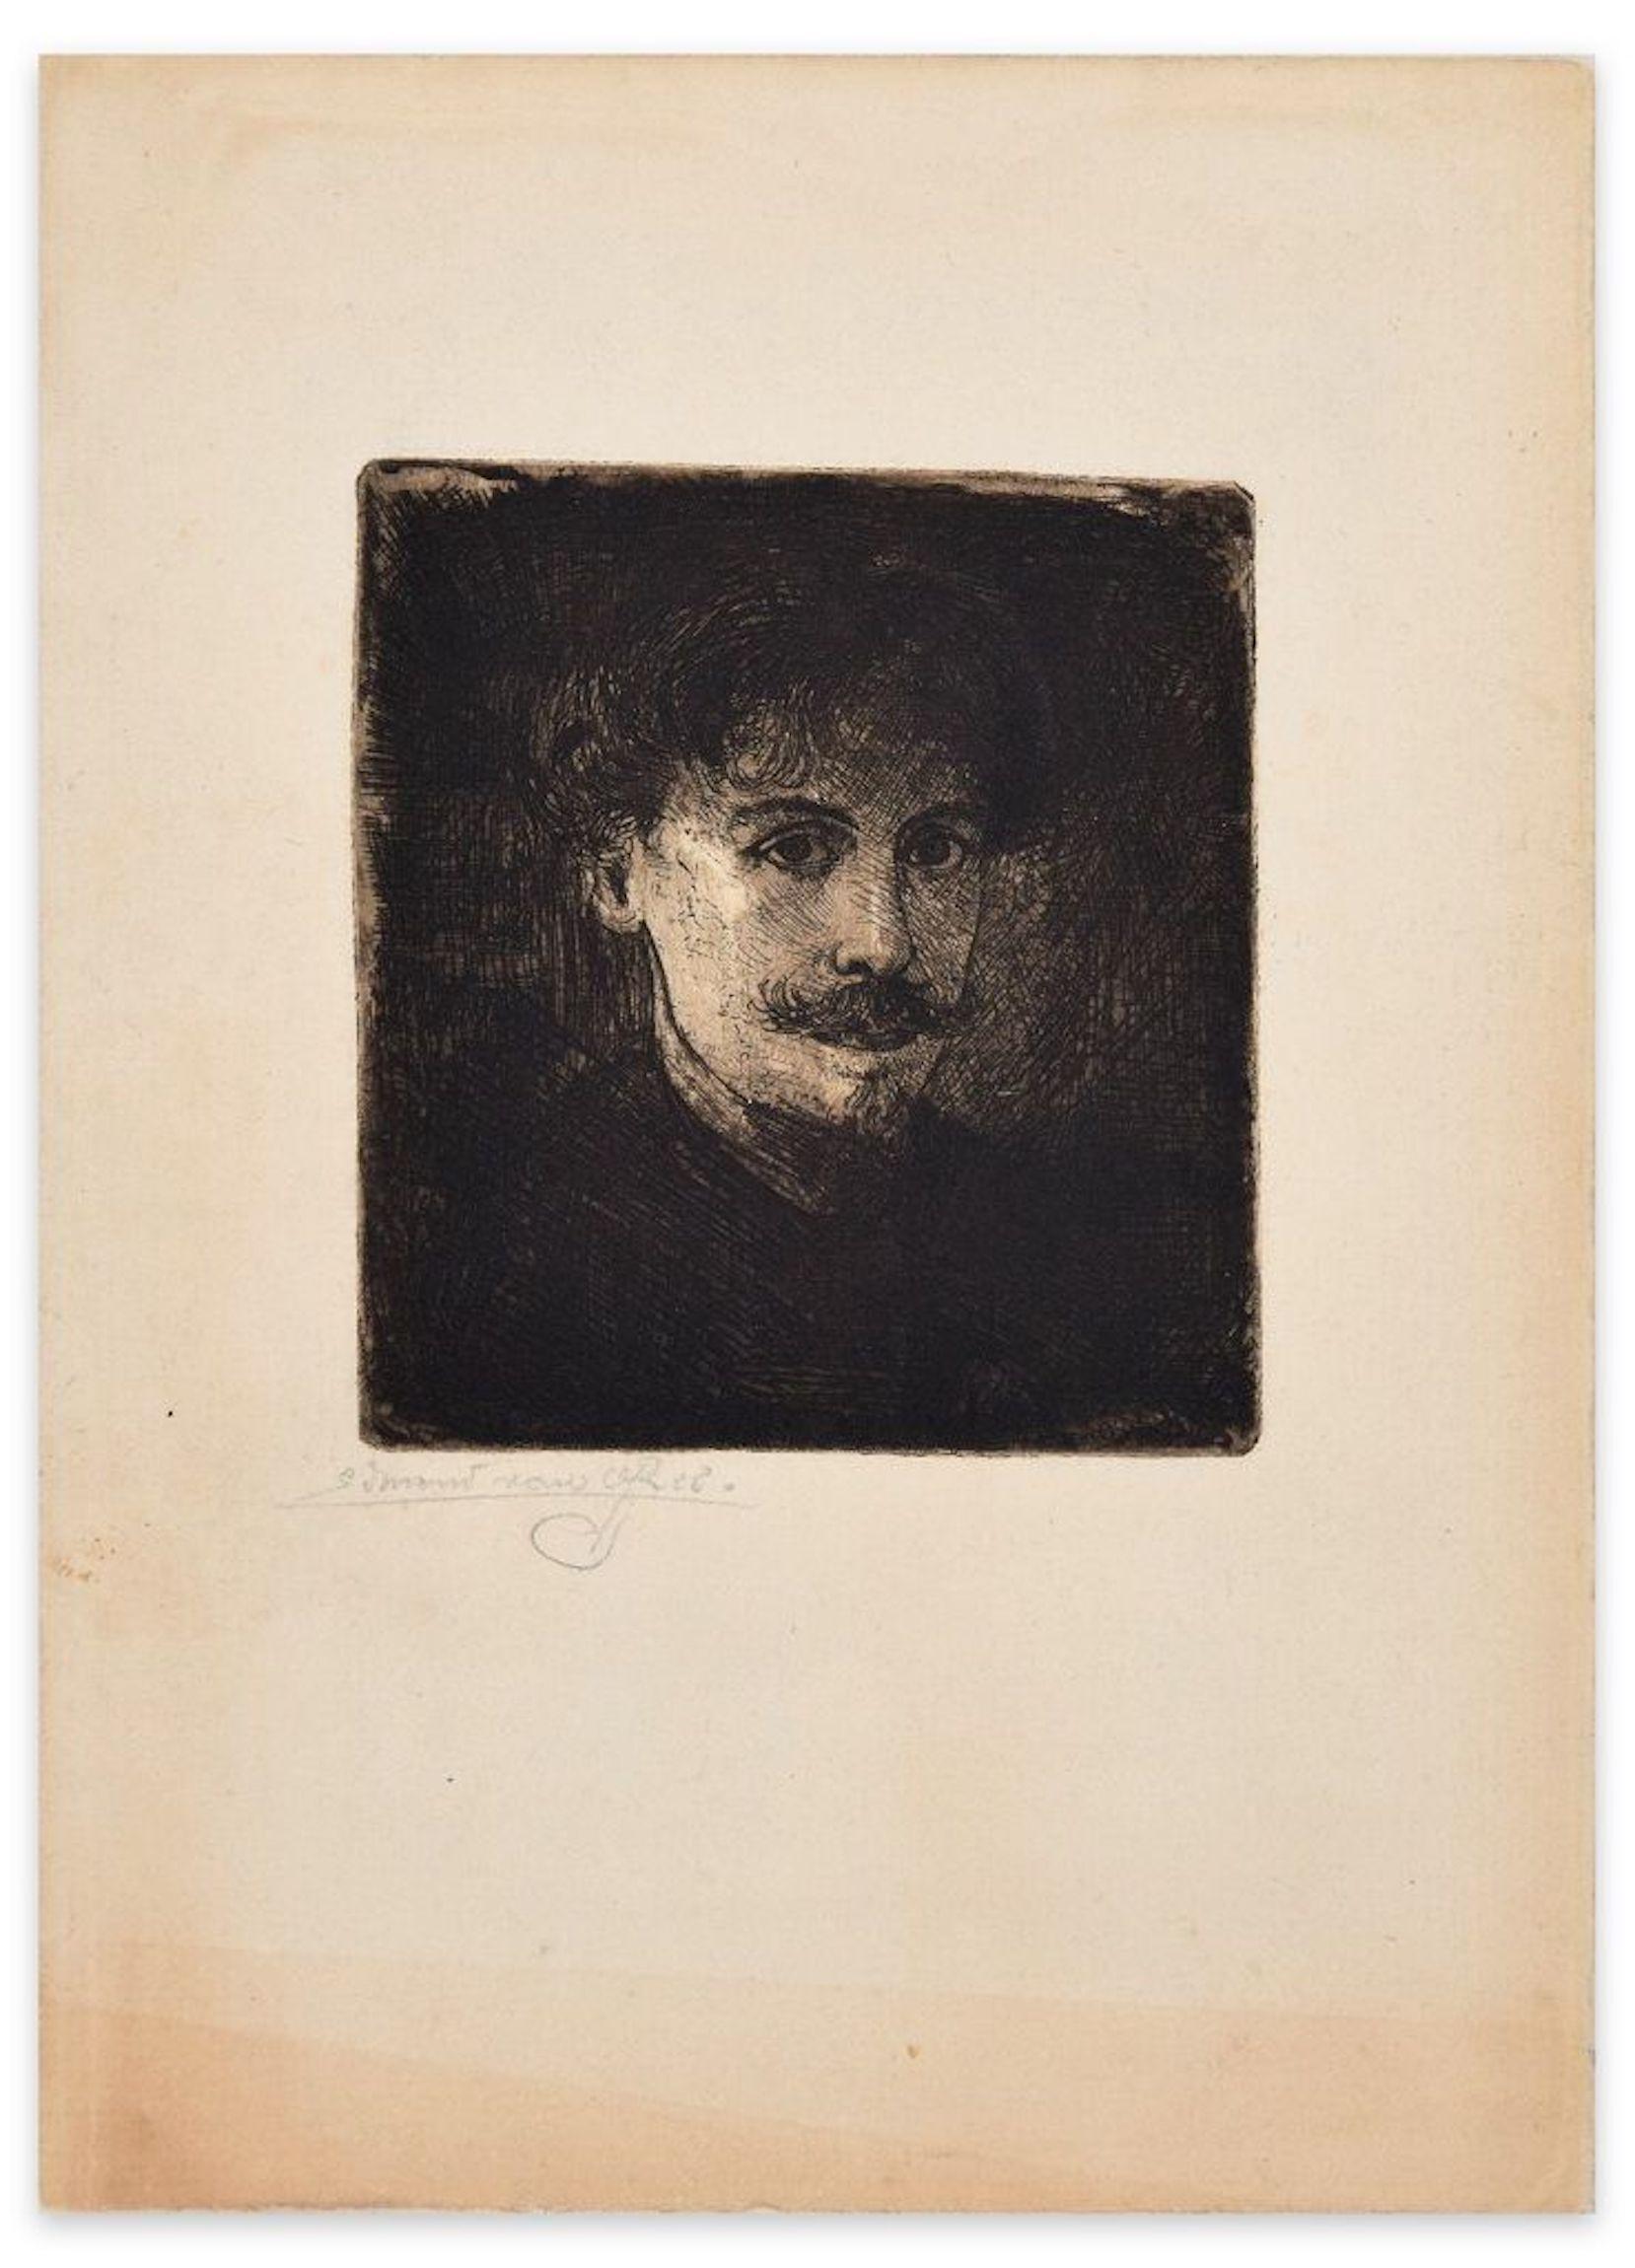 Edmond Marie Gabriel Van Offel Figurative Print - Portrait of Young Man - Original Etching by E. Van Offel - Early 20th Century